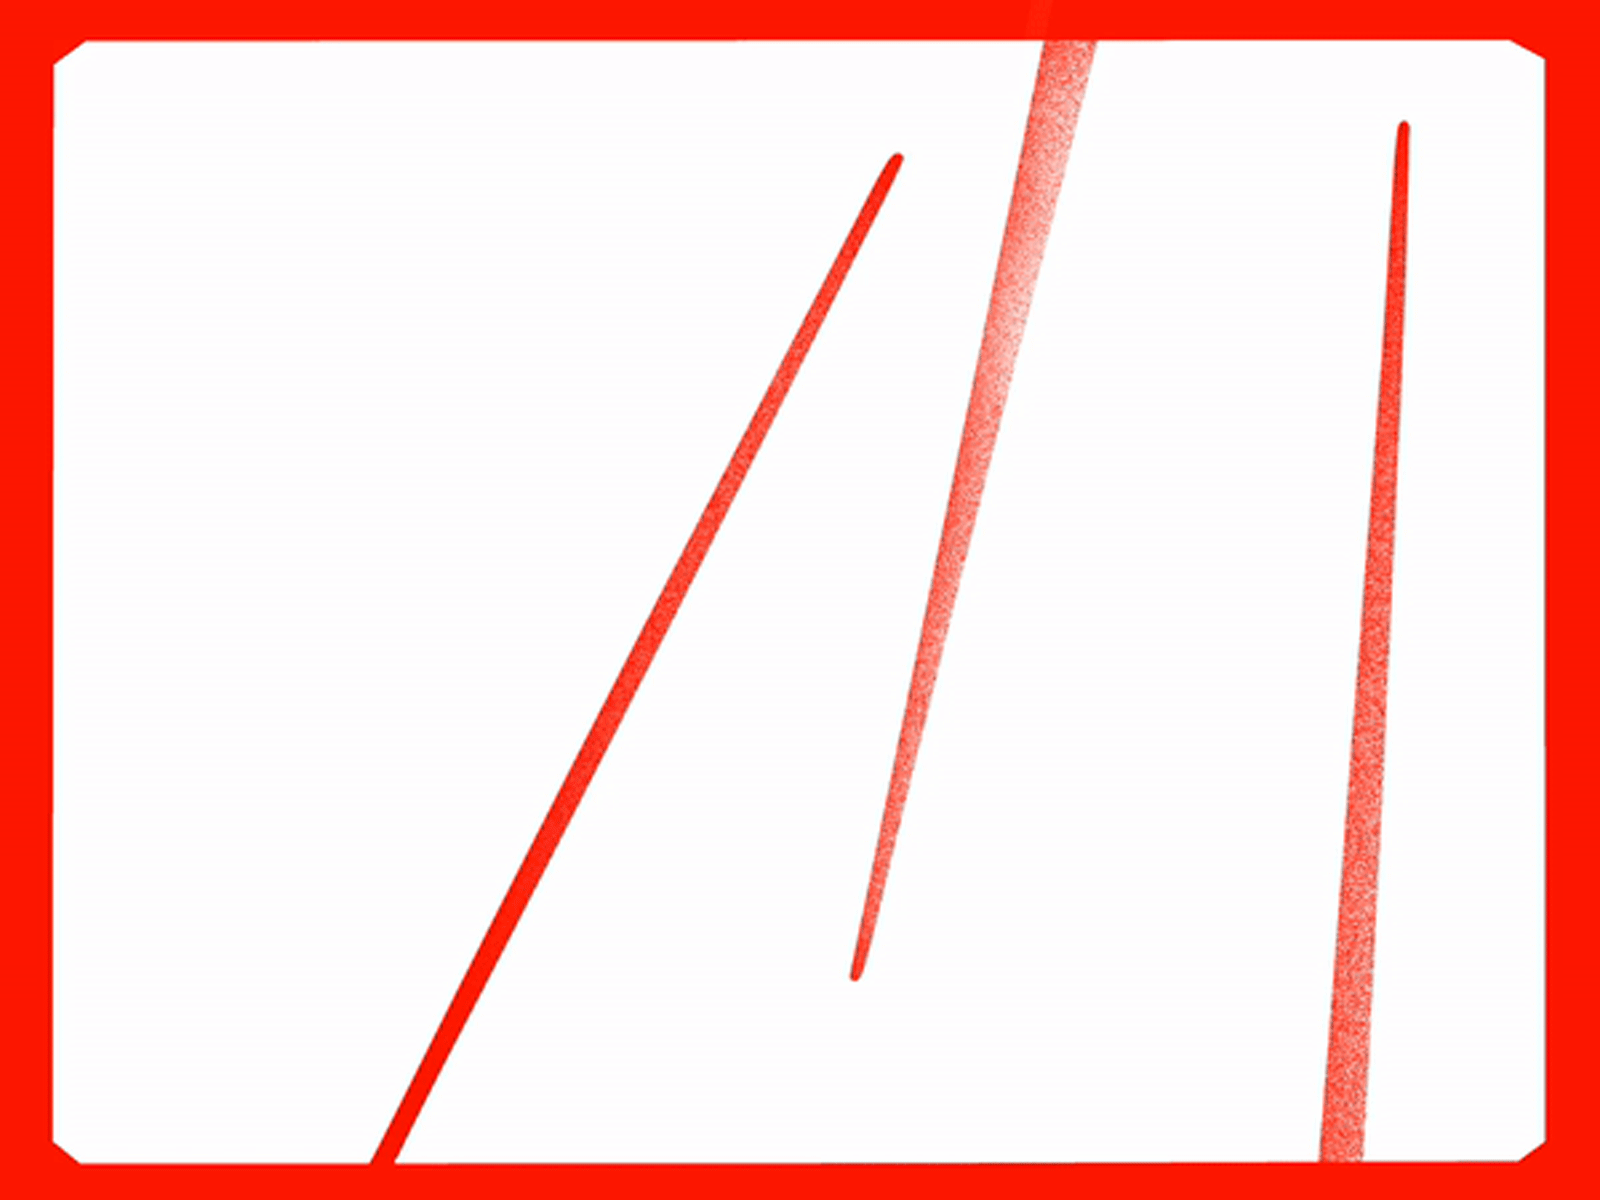 Letter M 36daysoftype animation frame by frame illustration letter m motion red